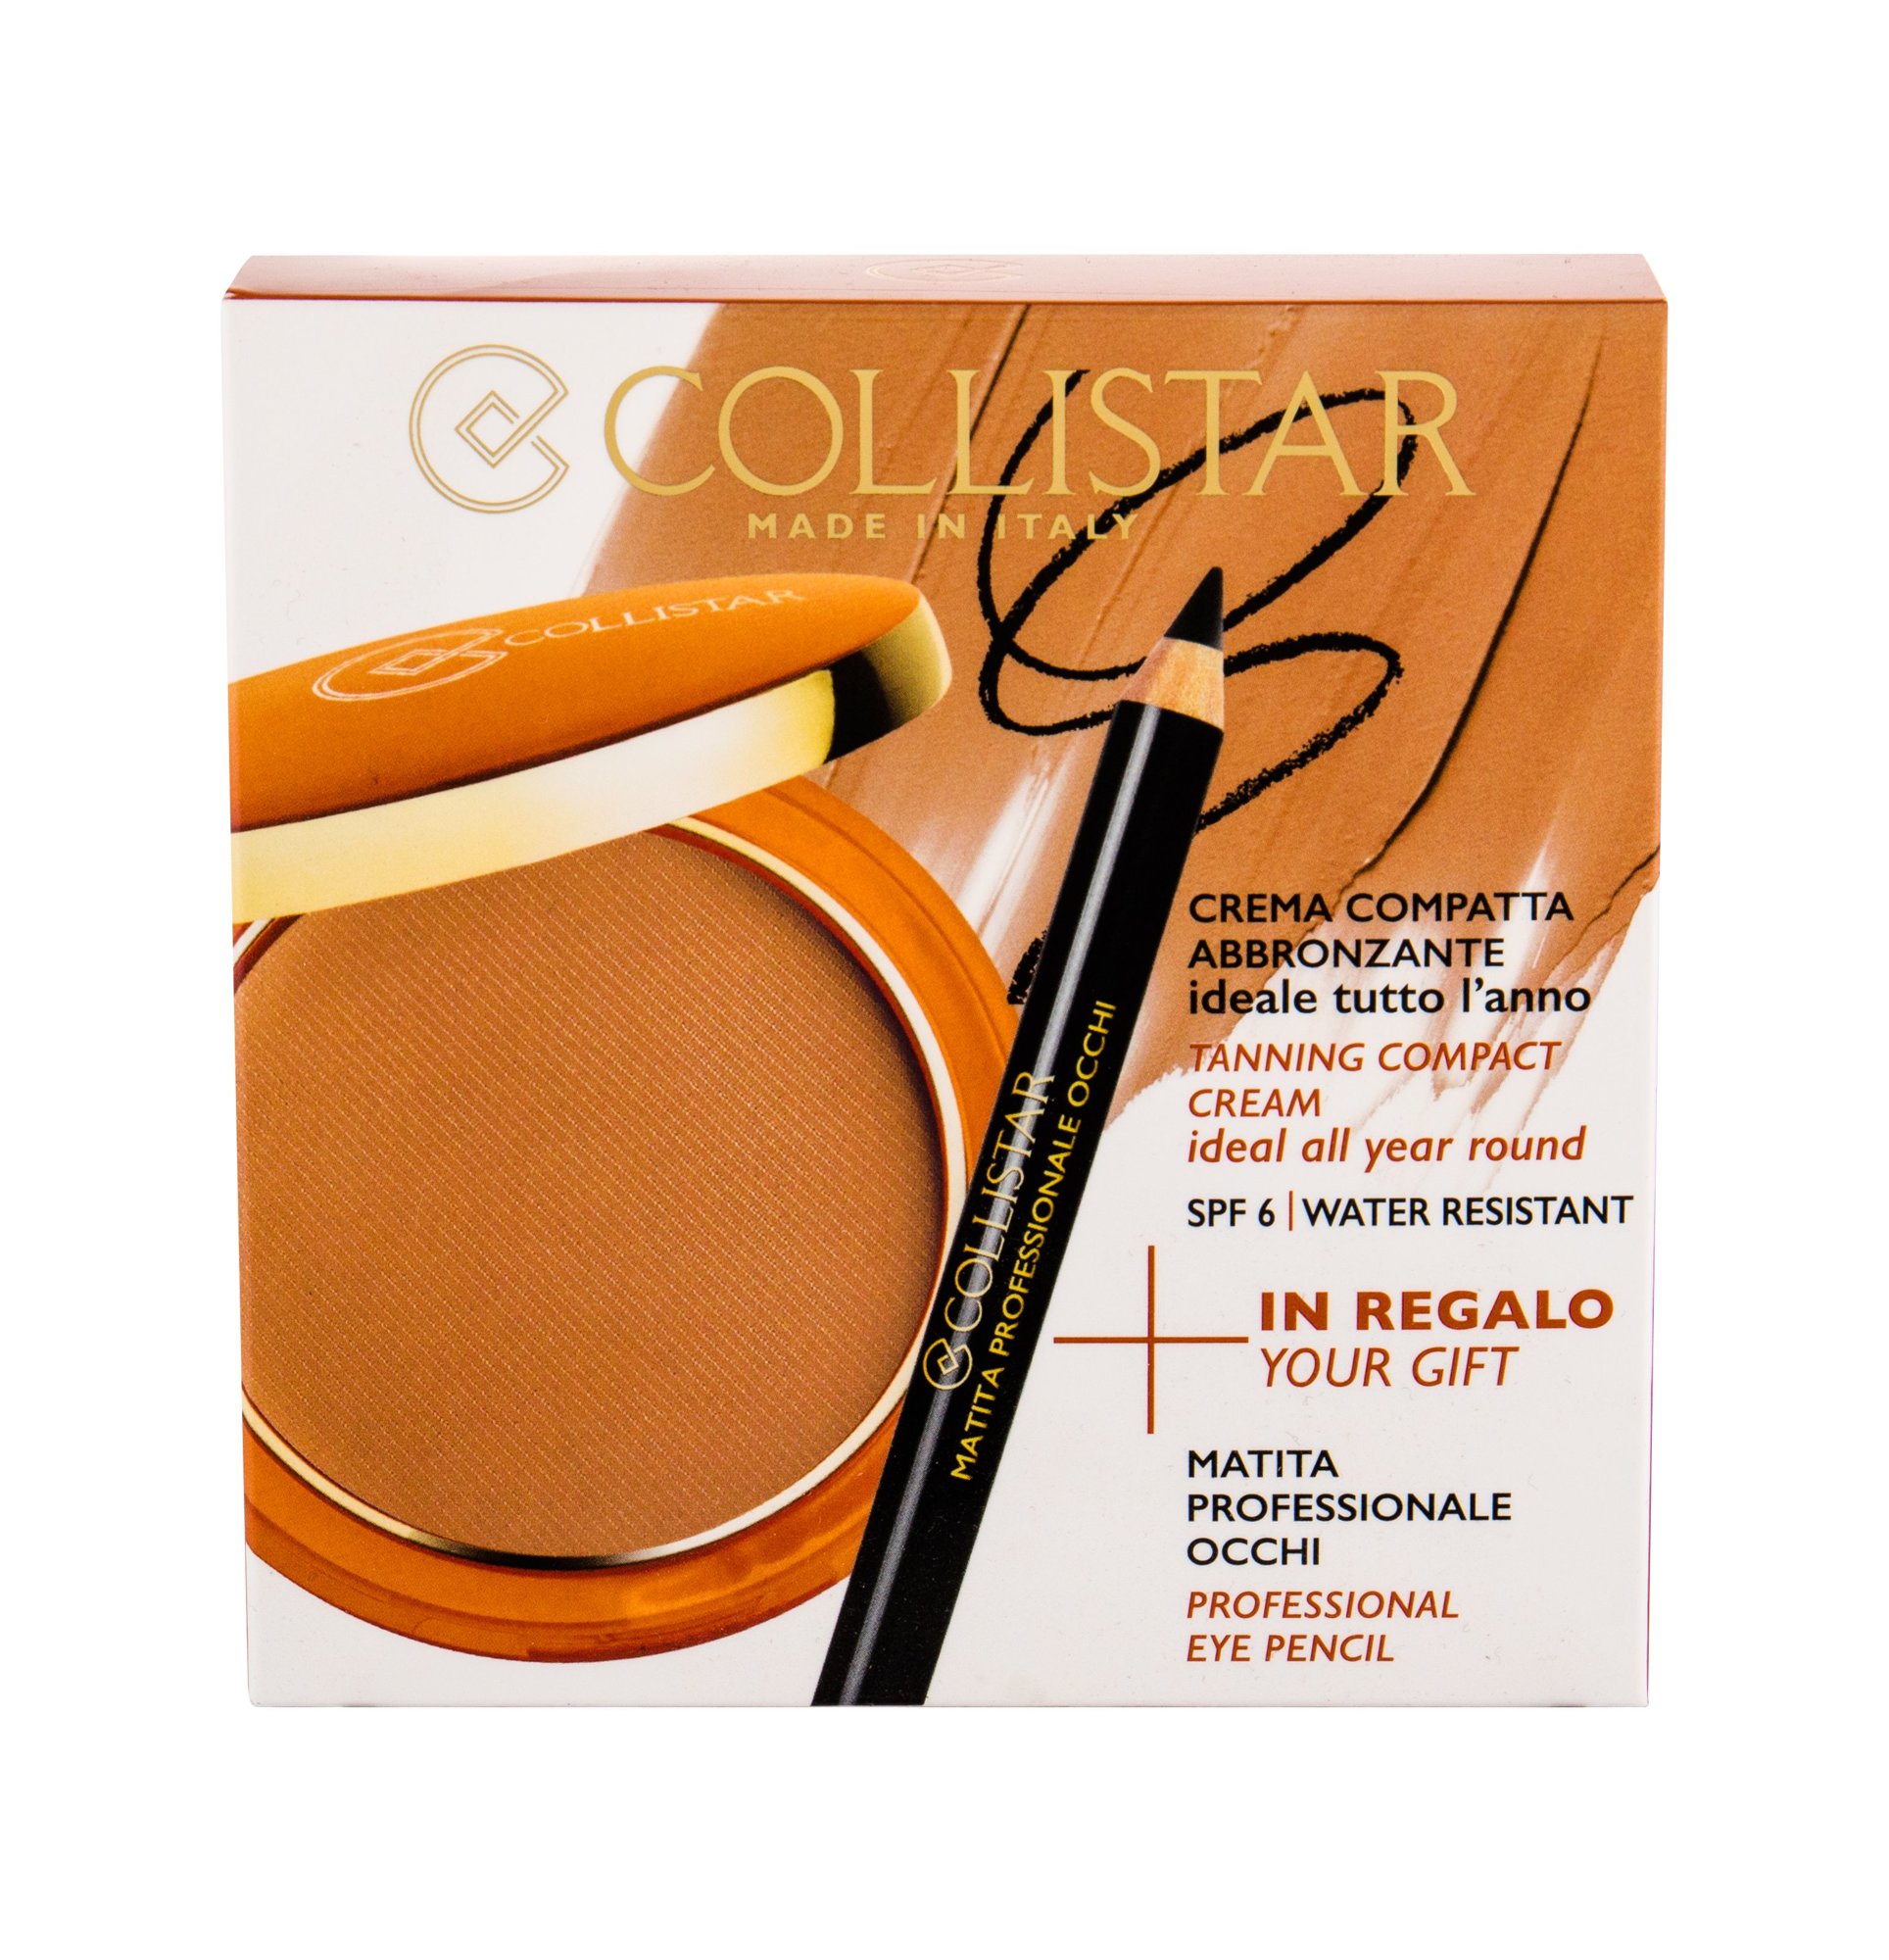 Collistar Tanning Compact Cream